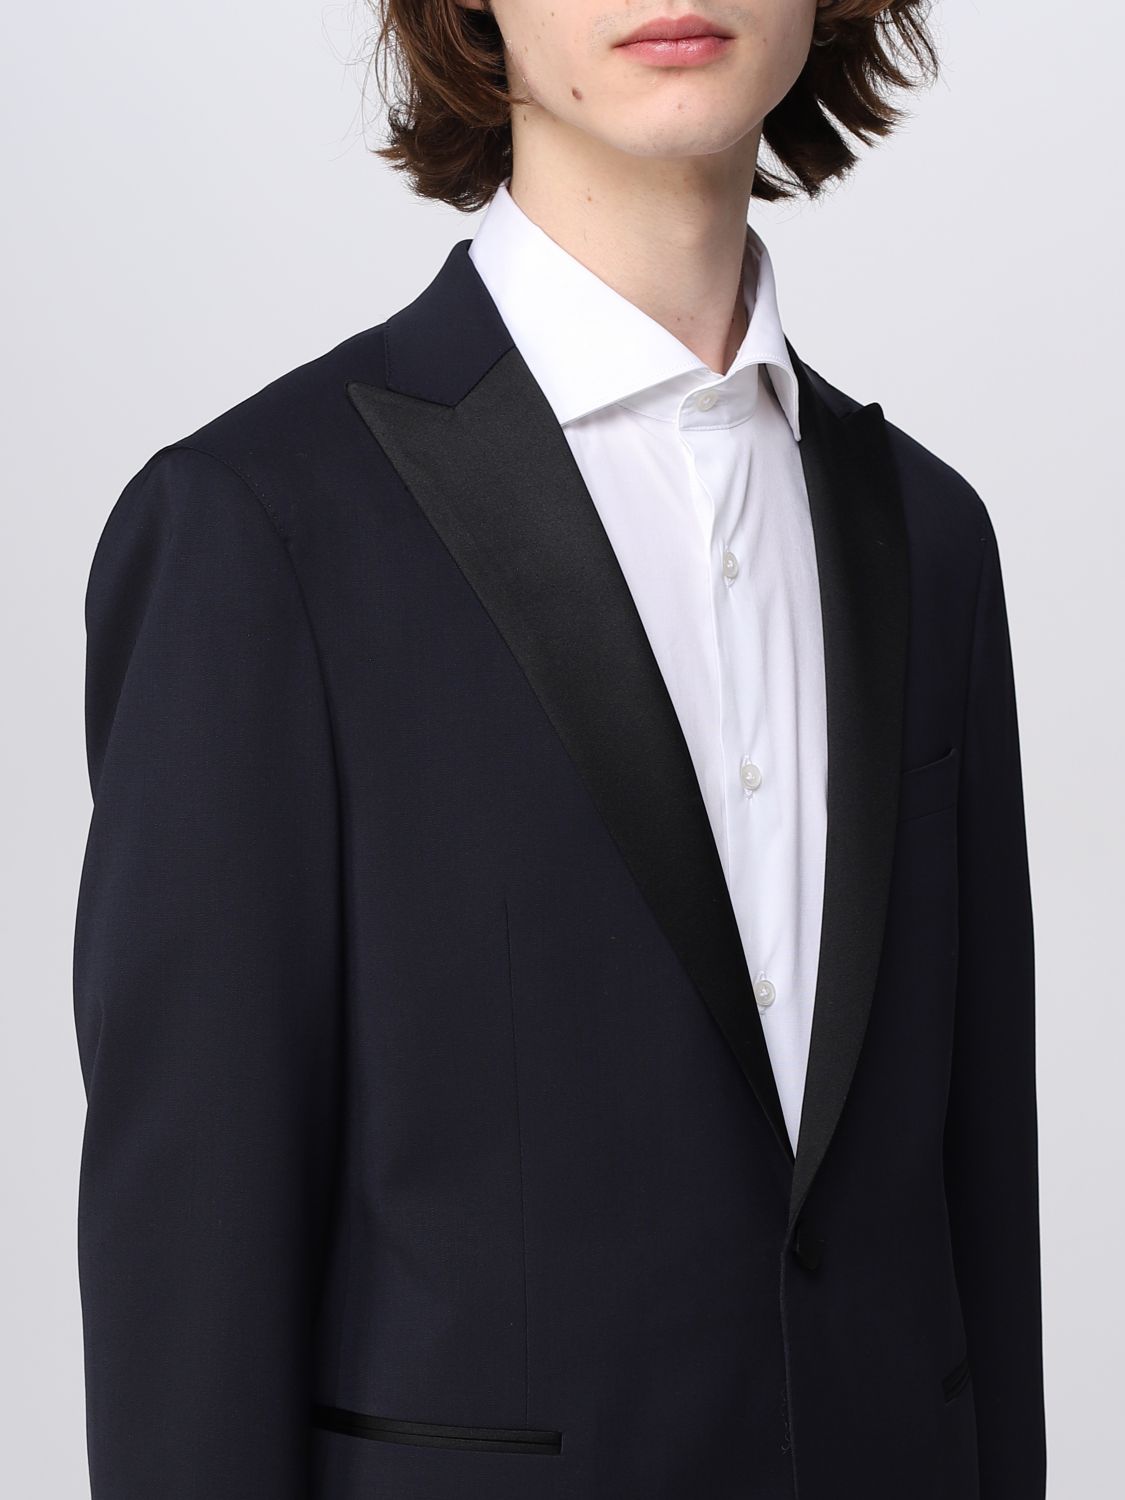 Hire Michael Kors Black Tuxedo with Waistcoat  Rathbones Tailor